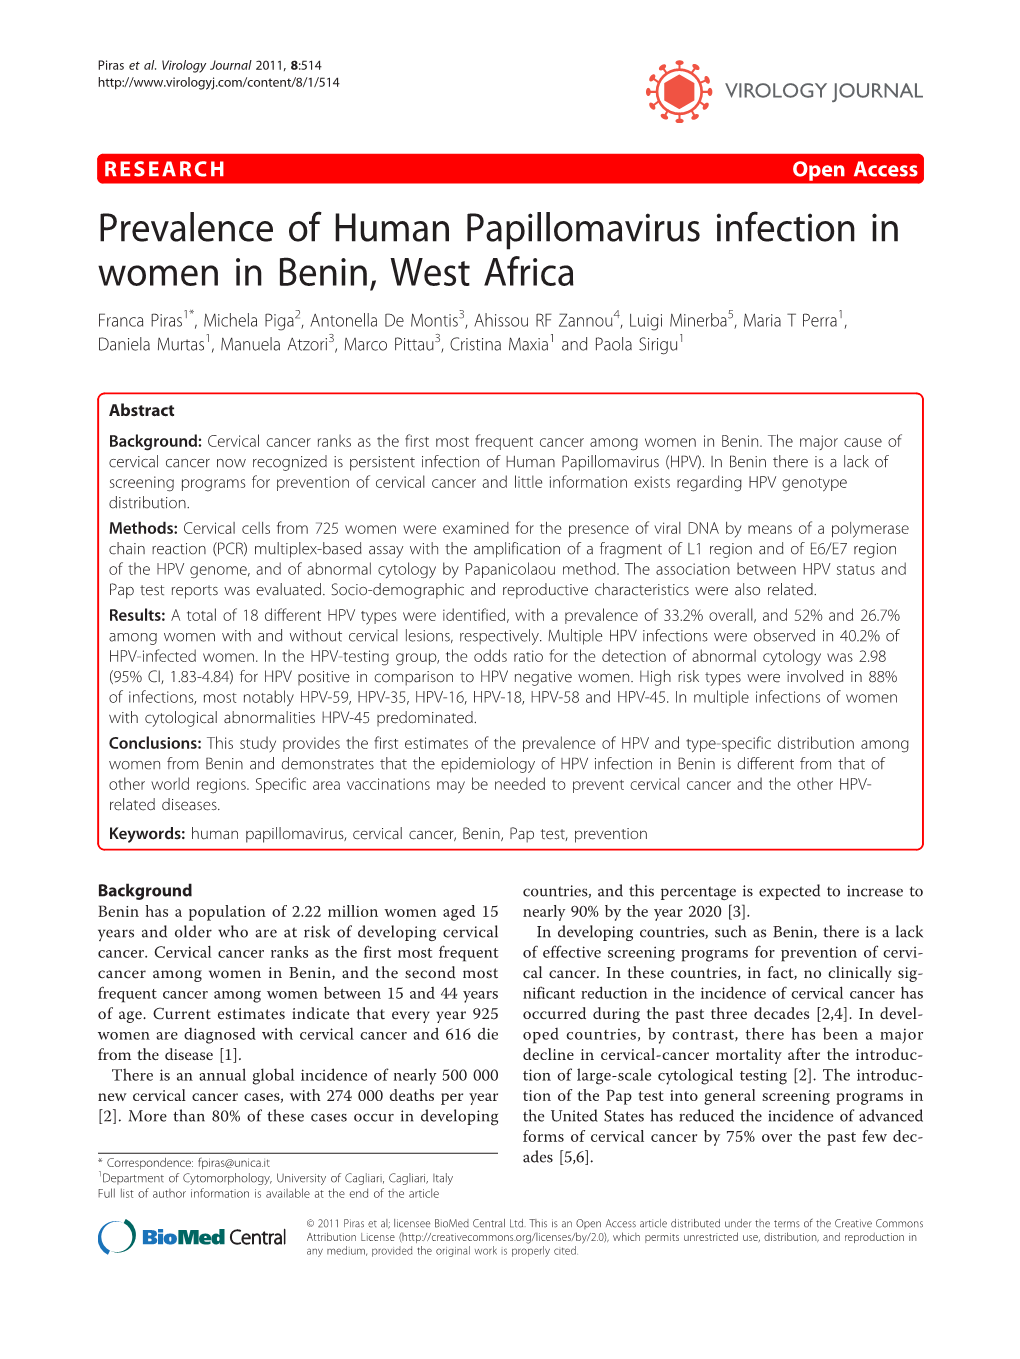 Prevalence of Human Papillomavirus Infection in Women in Benin, West